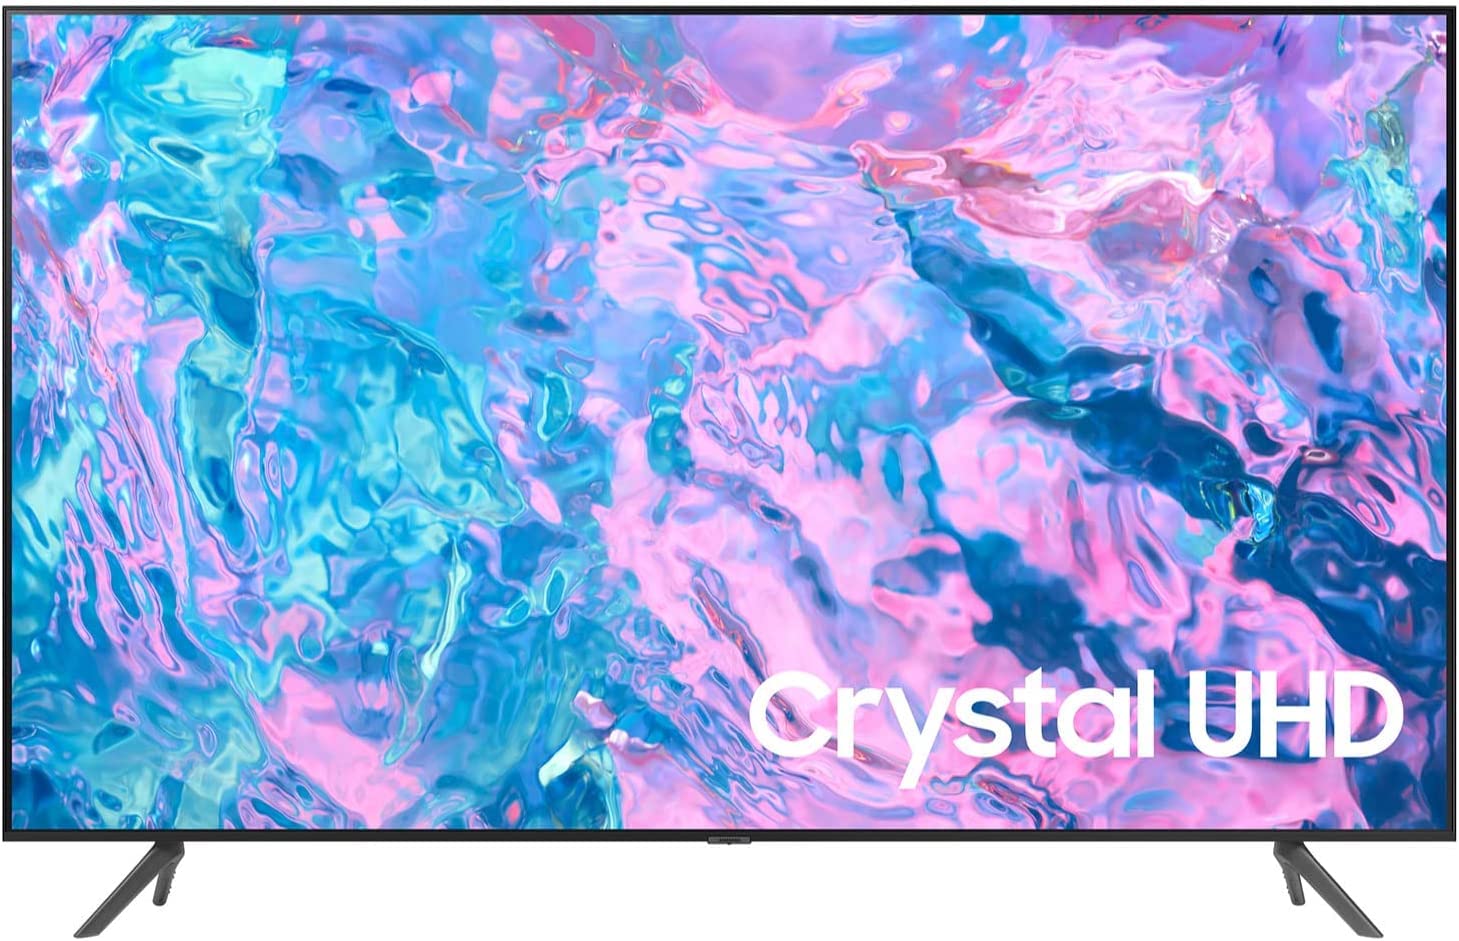 Samsung 70 class CU7000 Crystal UHD 4K Smart TV UN70CU7000 $299 In-store only